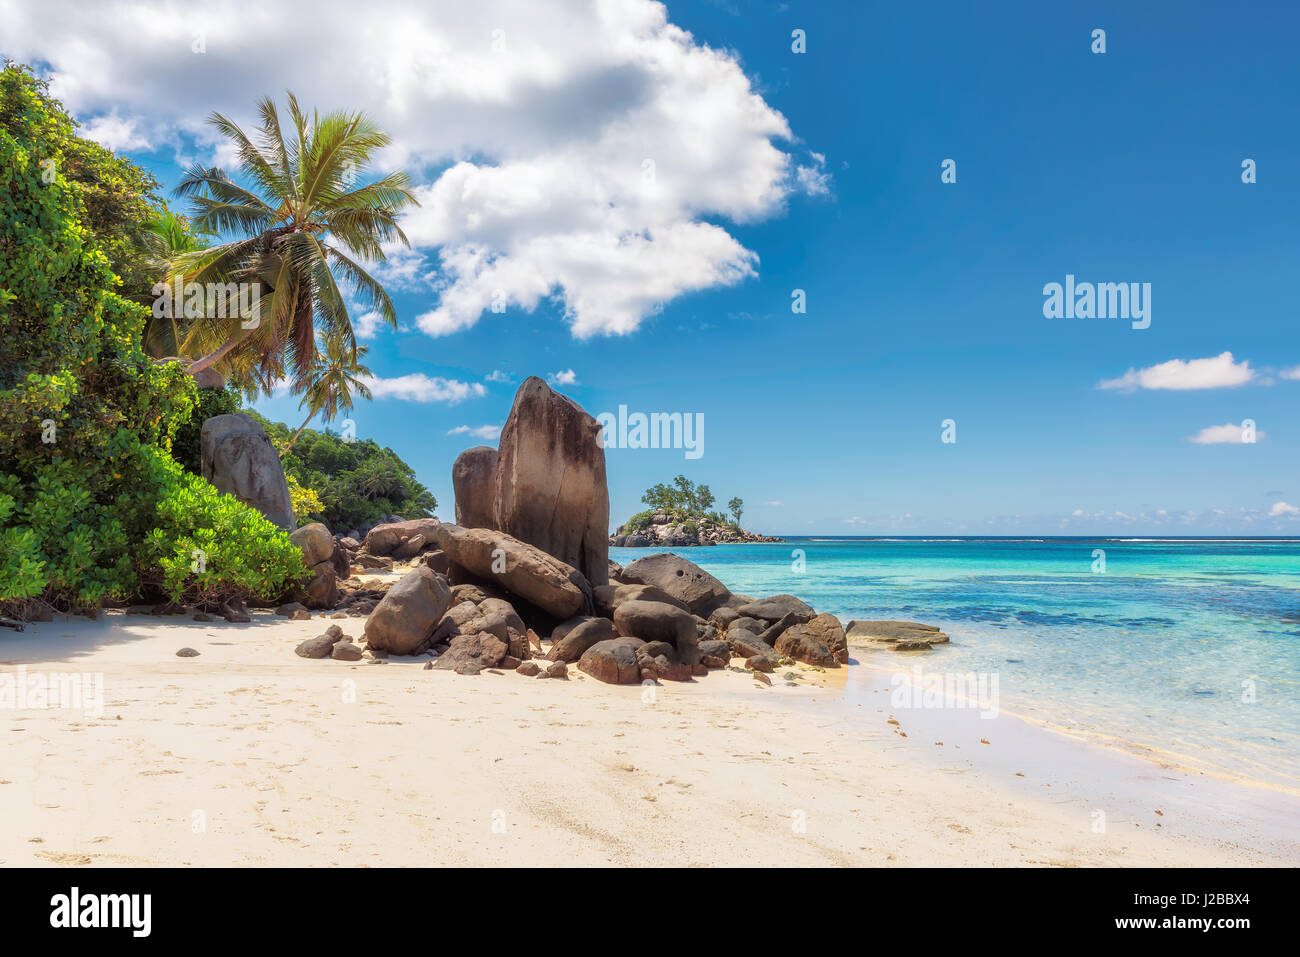 Palm trees and rocks on white sand beach, Mahe island, Seychelles Stock Photo